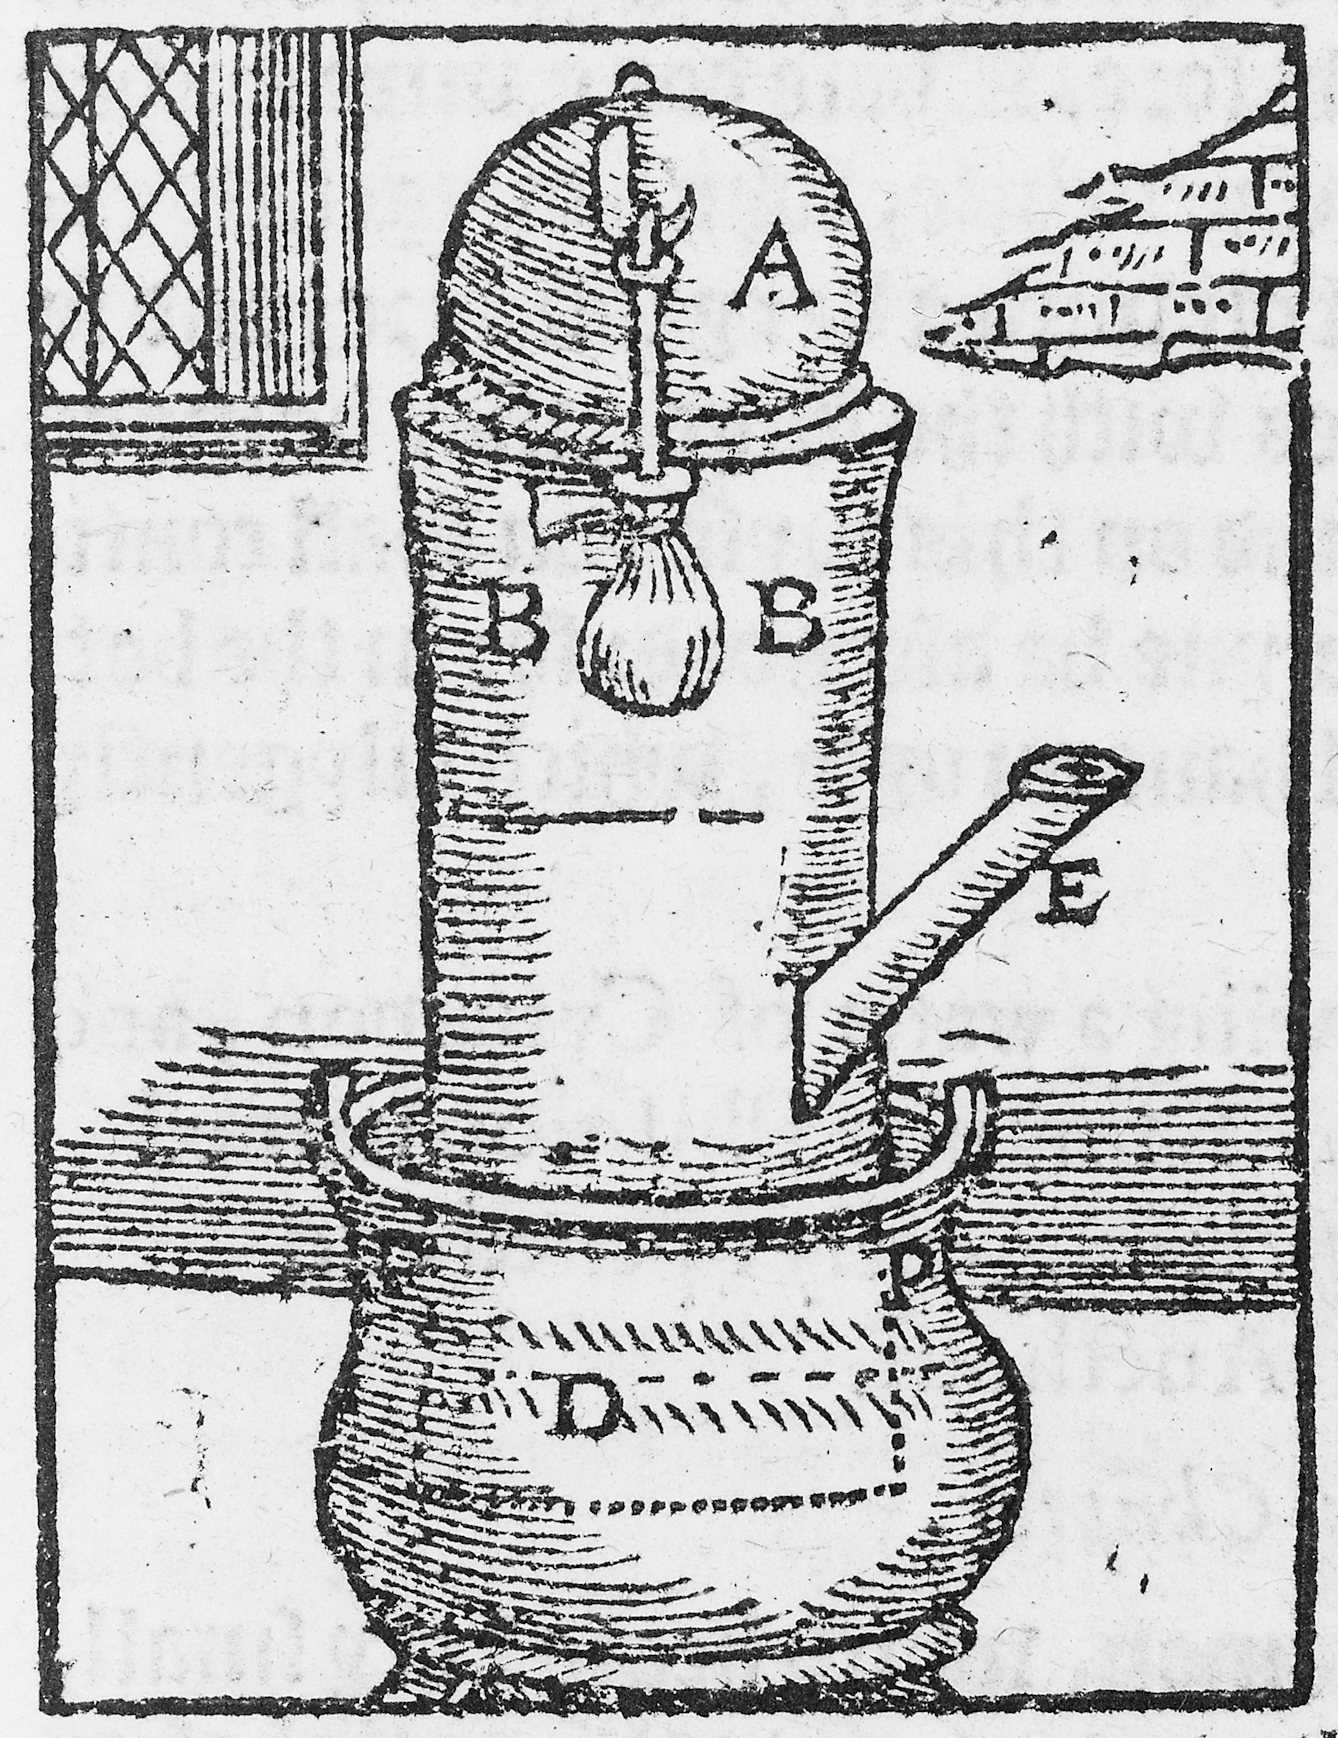 illustration showing the apparatus used for preparing cinnamon before distillation to obtain oil of cinnamon